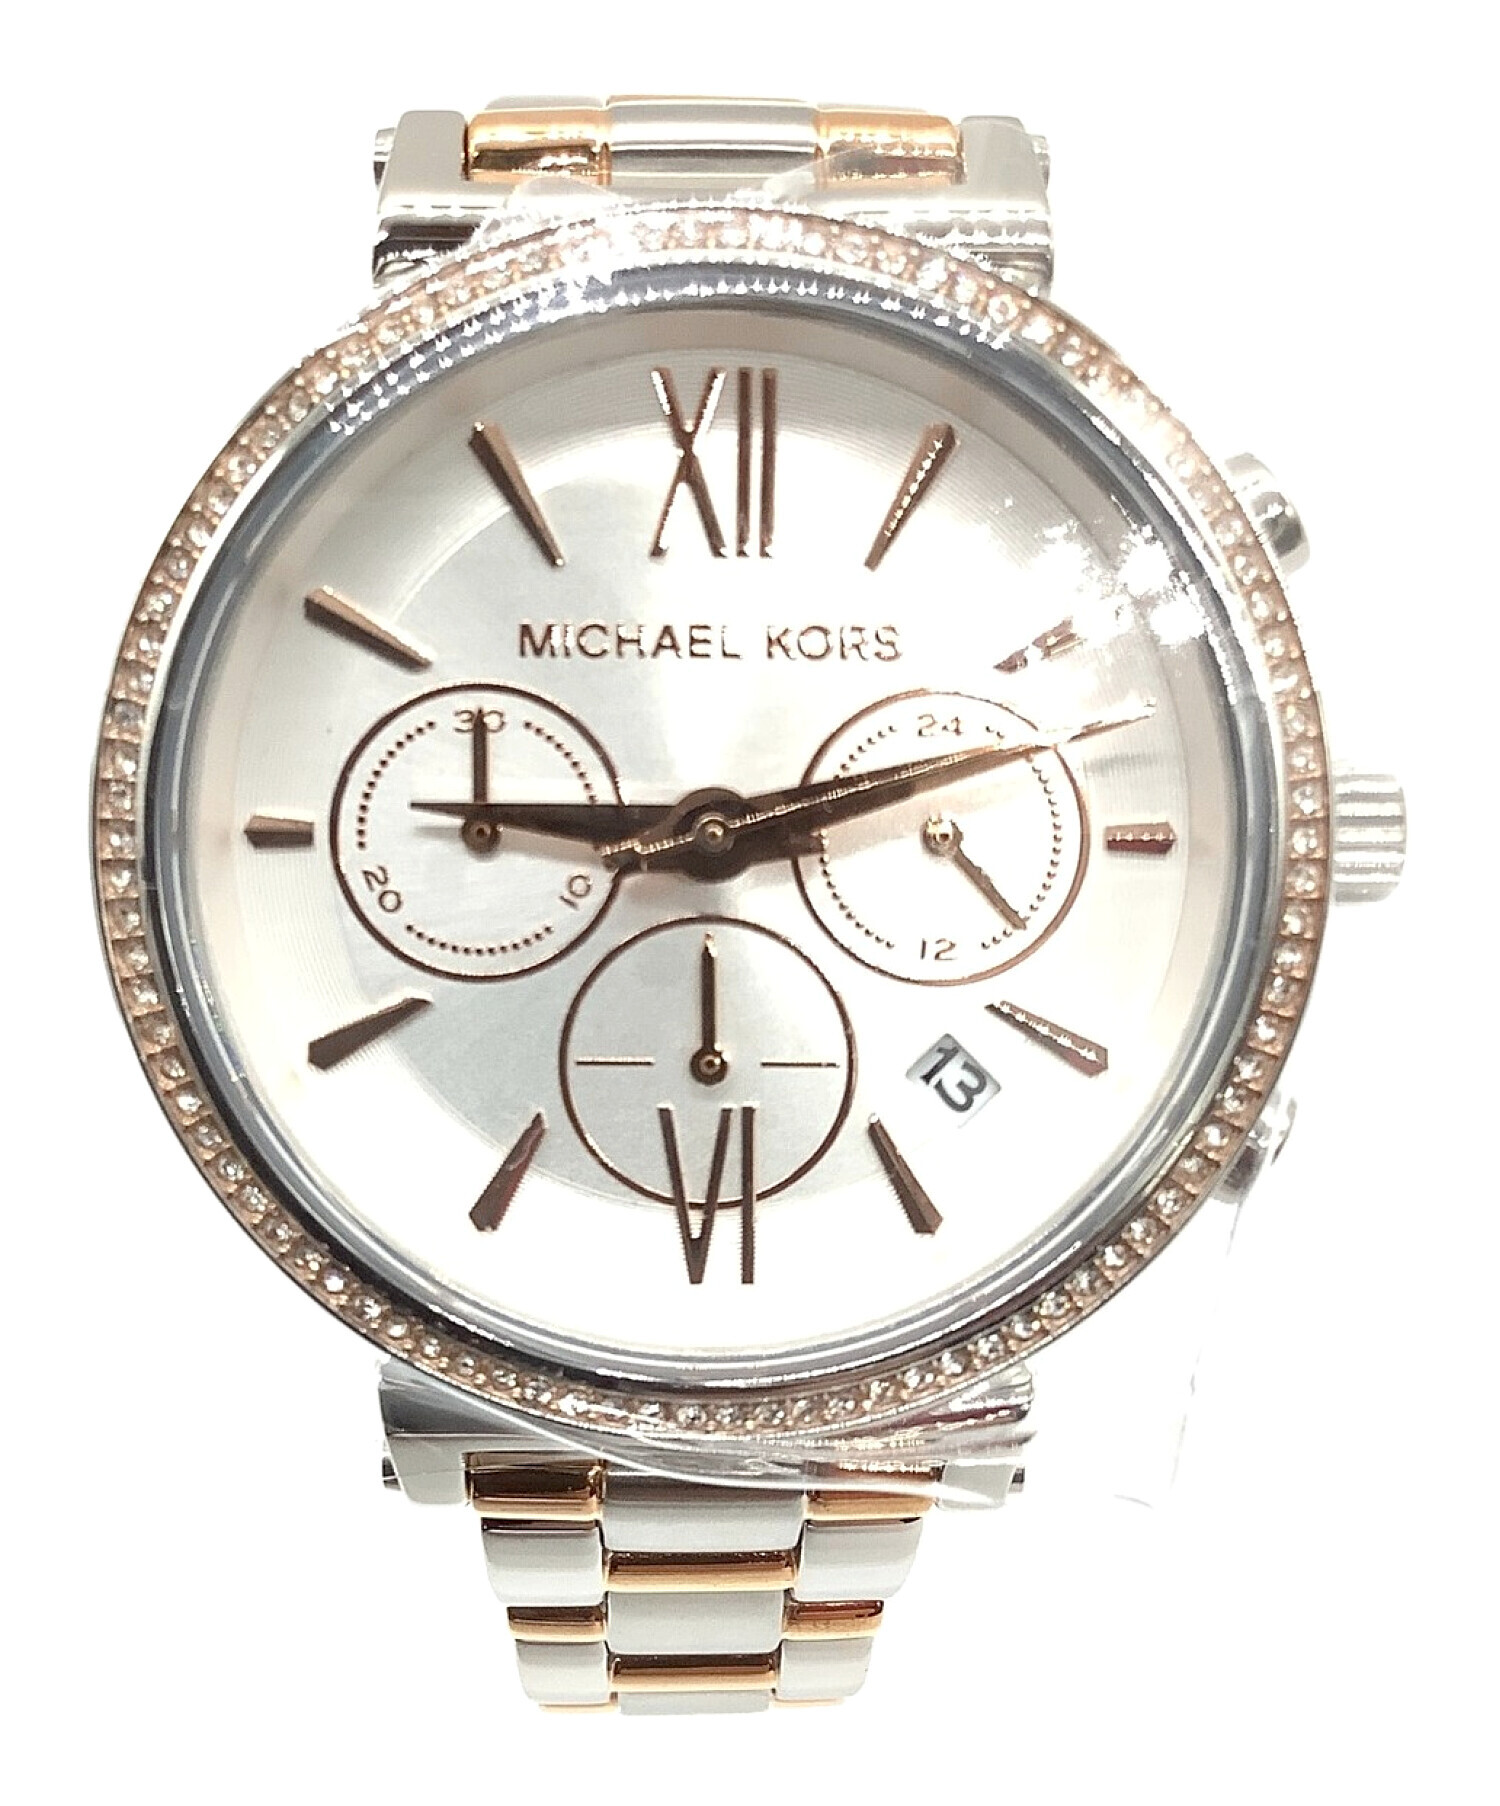 MICHAEL KORS 腕時計 ゴールド - 腕時計(デジタル)